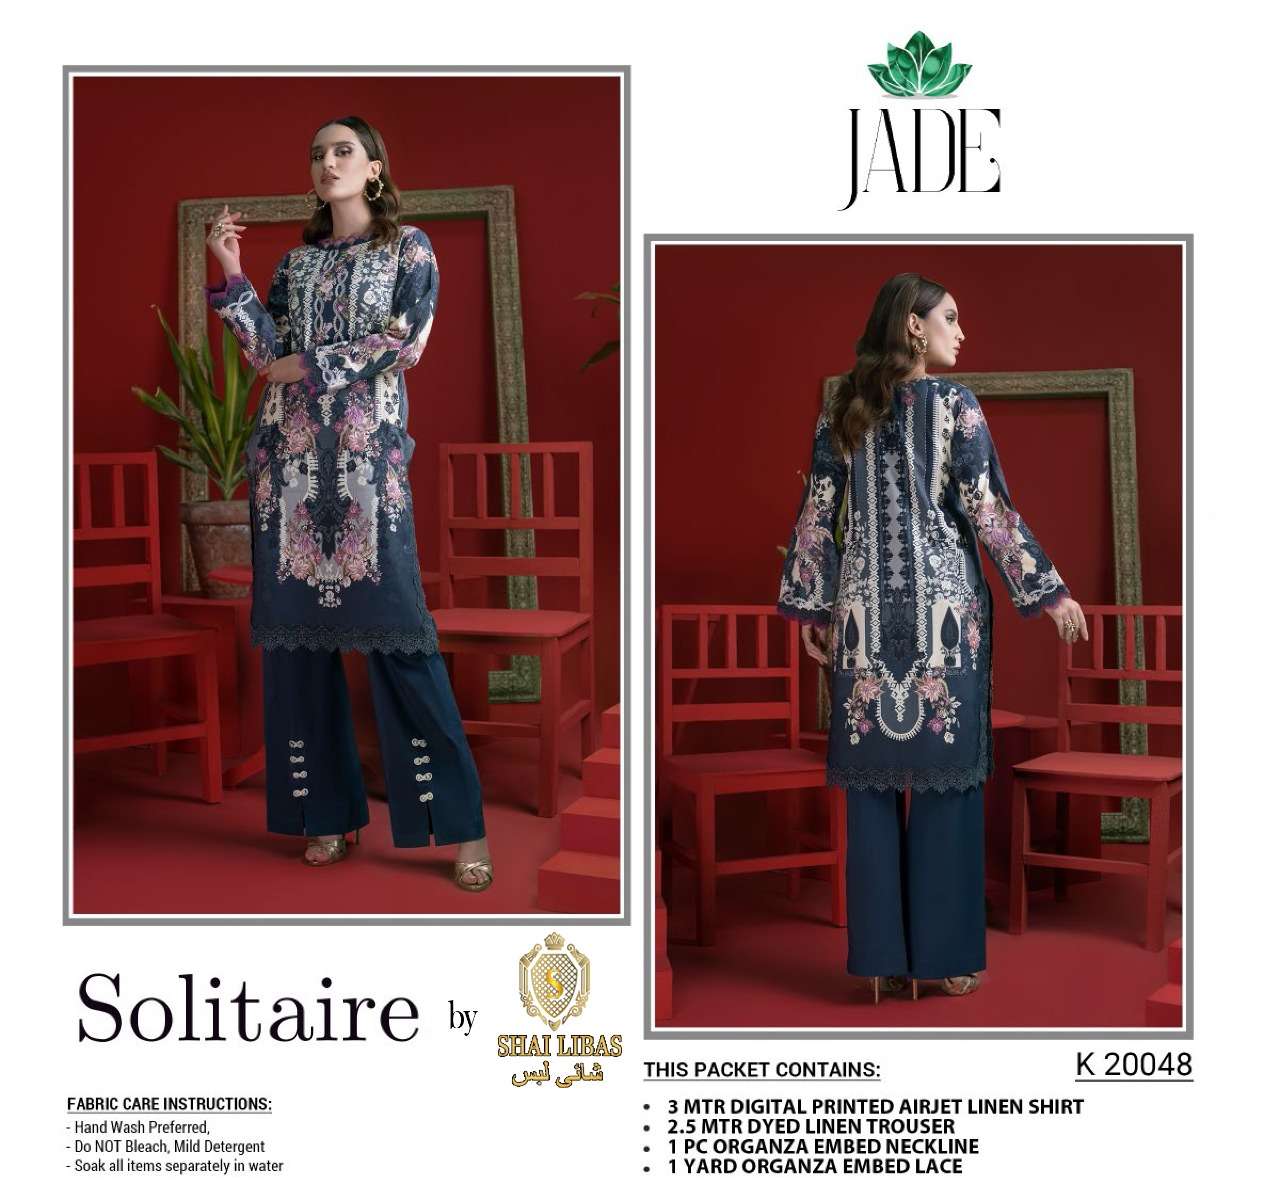 jade shai libas designer pakistani salwar suits with cotton dupatta wholesale price at surat market 